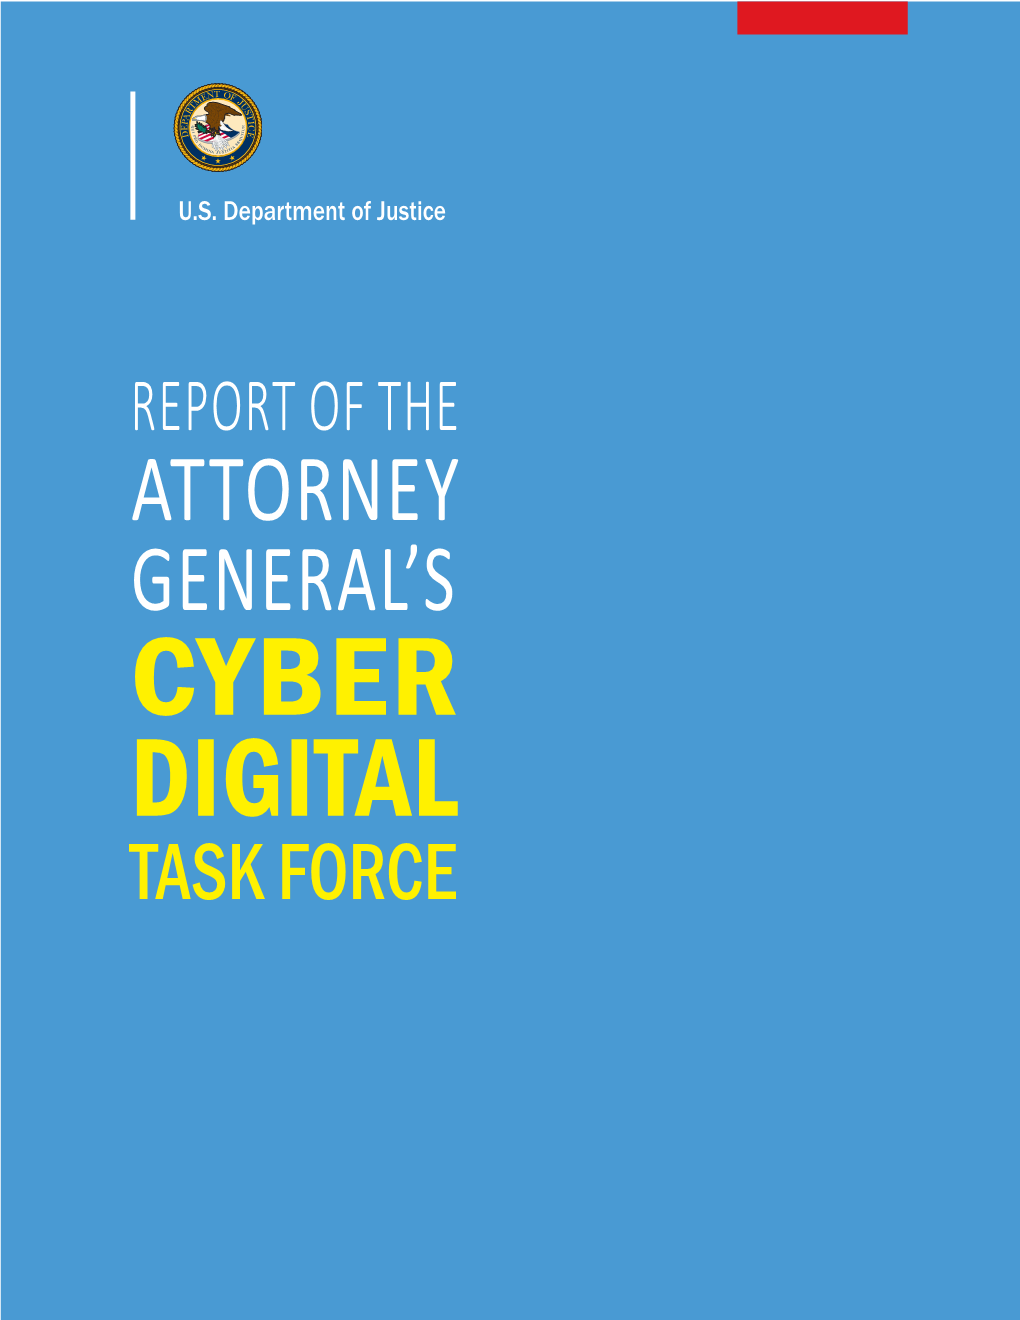 Cyber-Digital Task Force Report